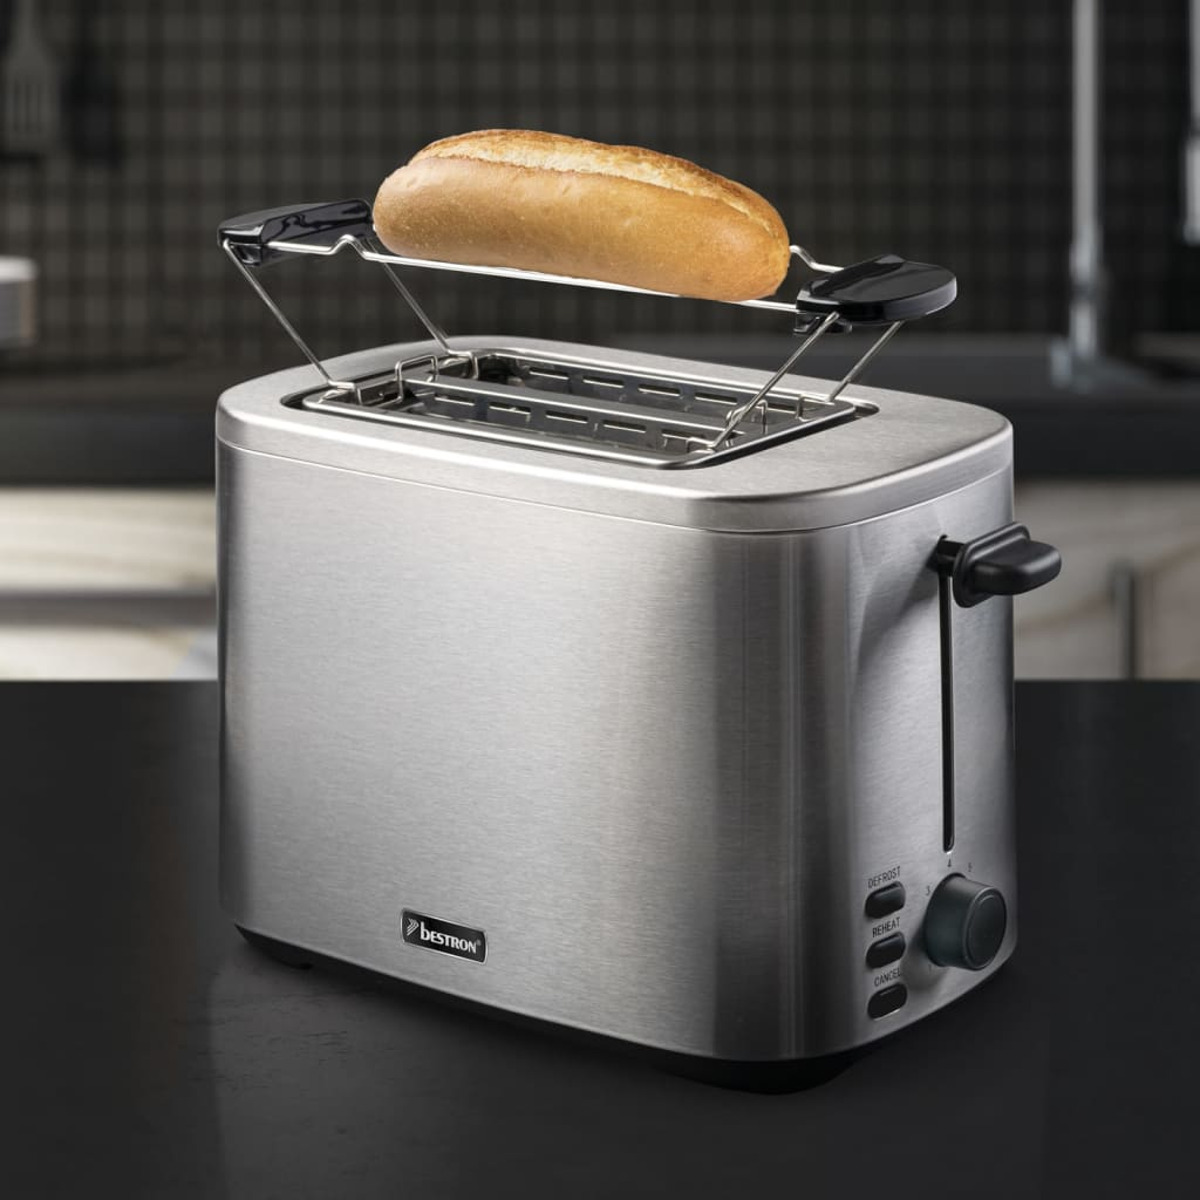 Schlitze: BESTRON 1) Toaster 440277 (800 Silber Watt,